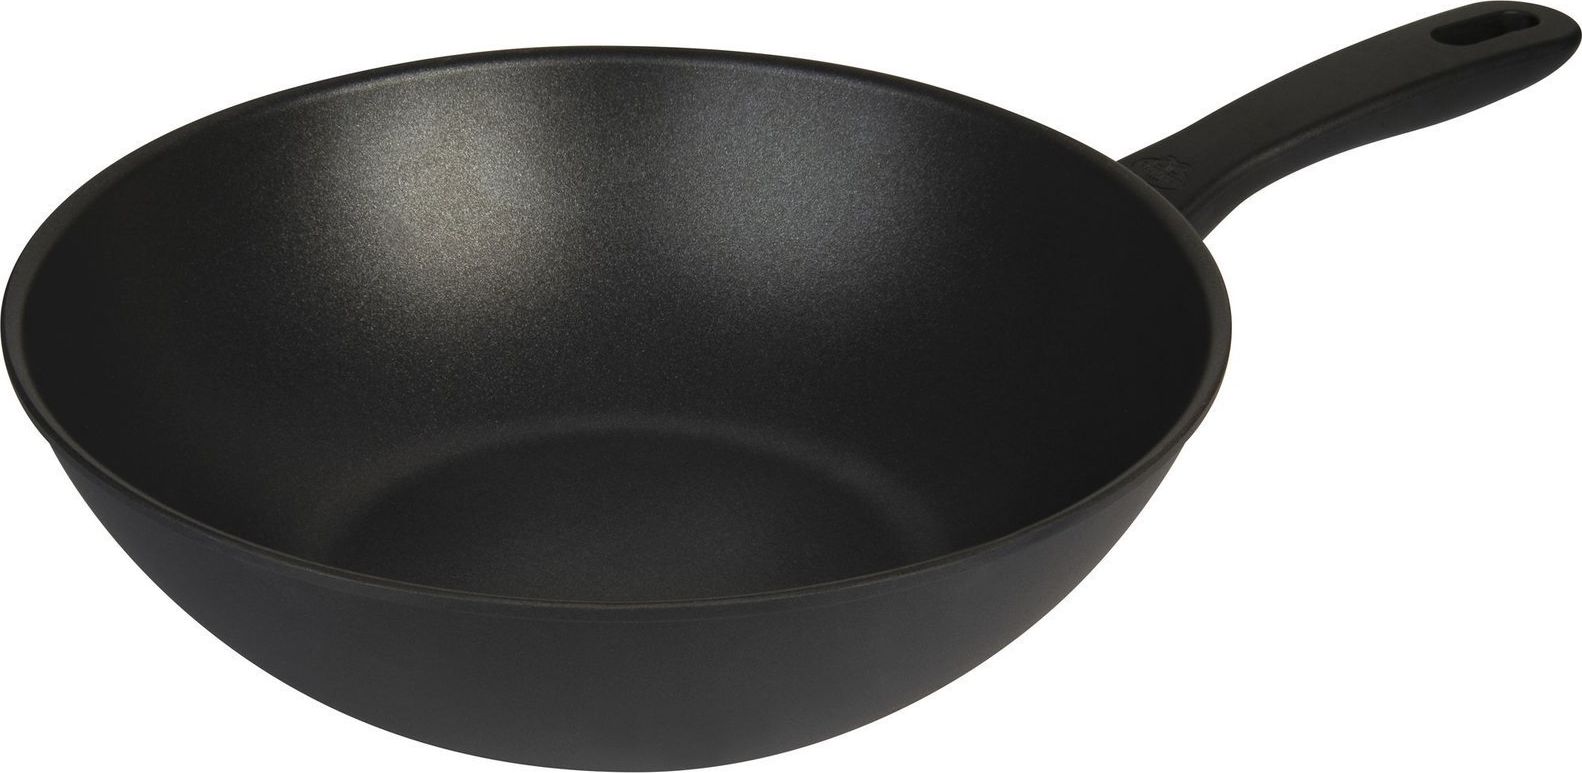 Frying Pan BALLARINI Avola wok titanium 30 cm 75002-915-0 Pannas un katli